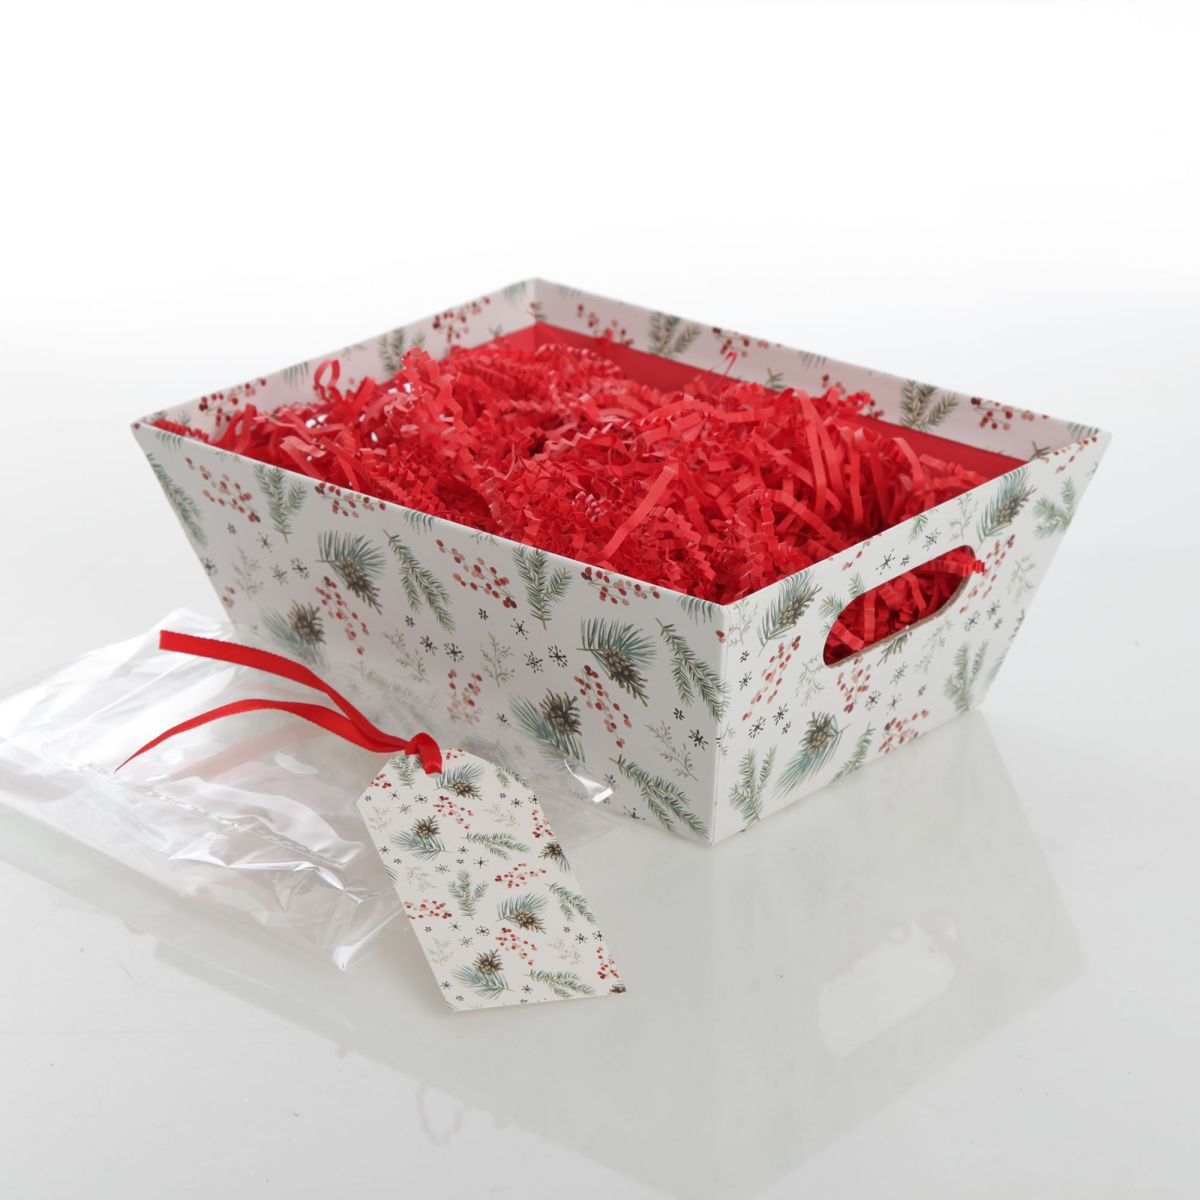 Aggregate more than 70 christmas gift baskets australia